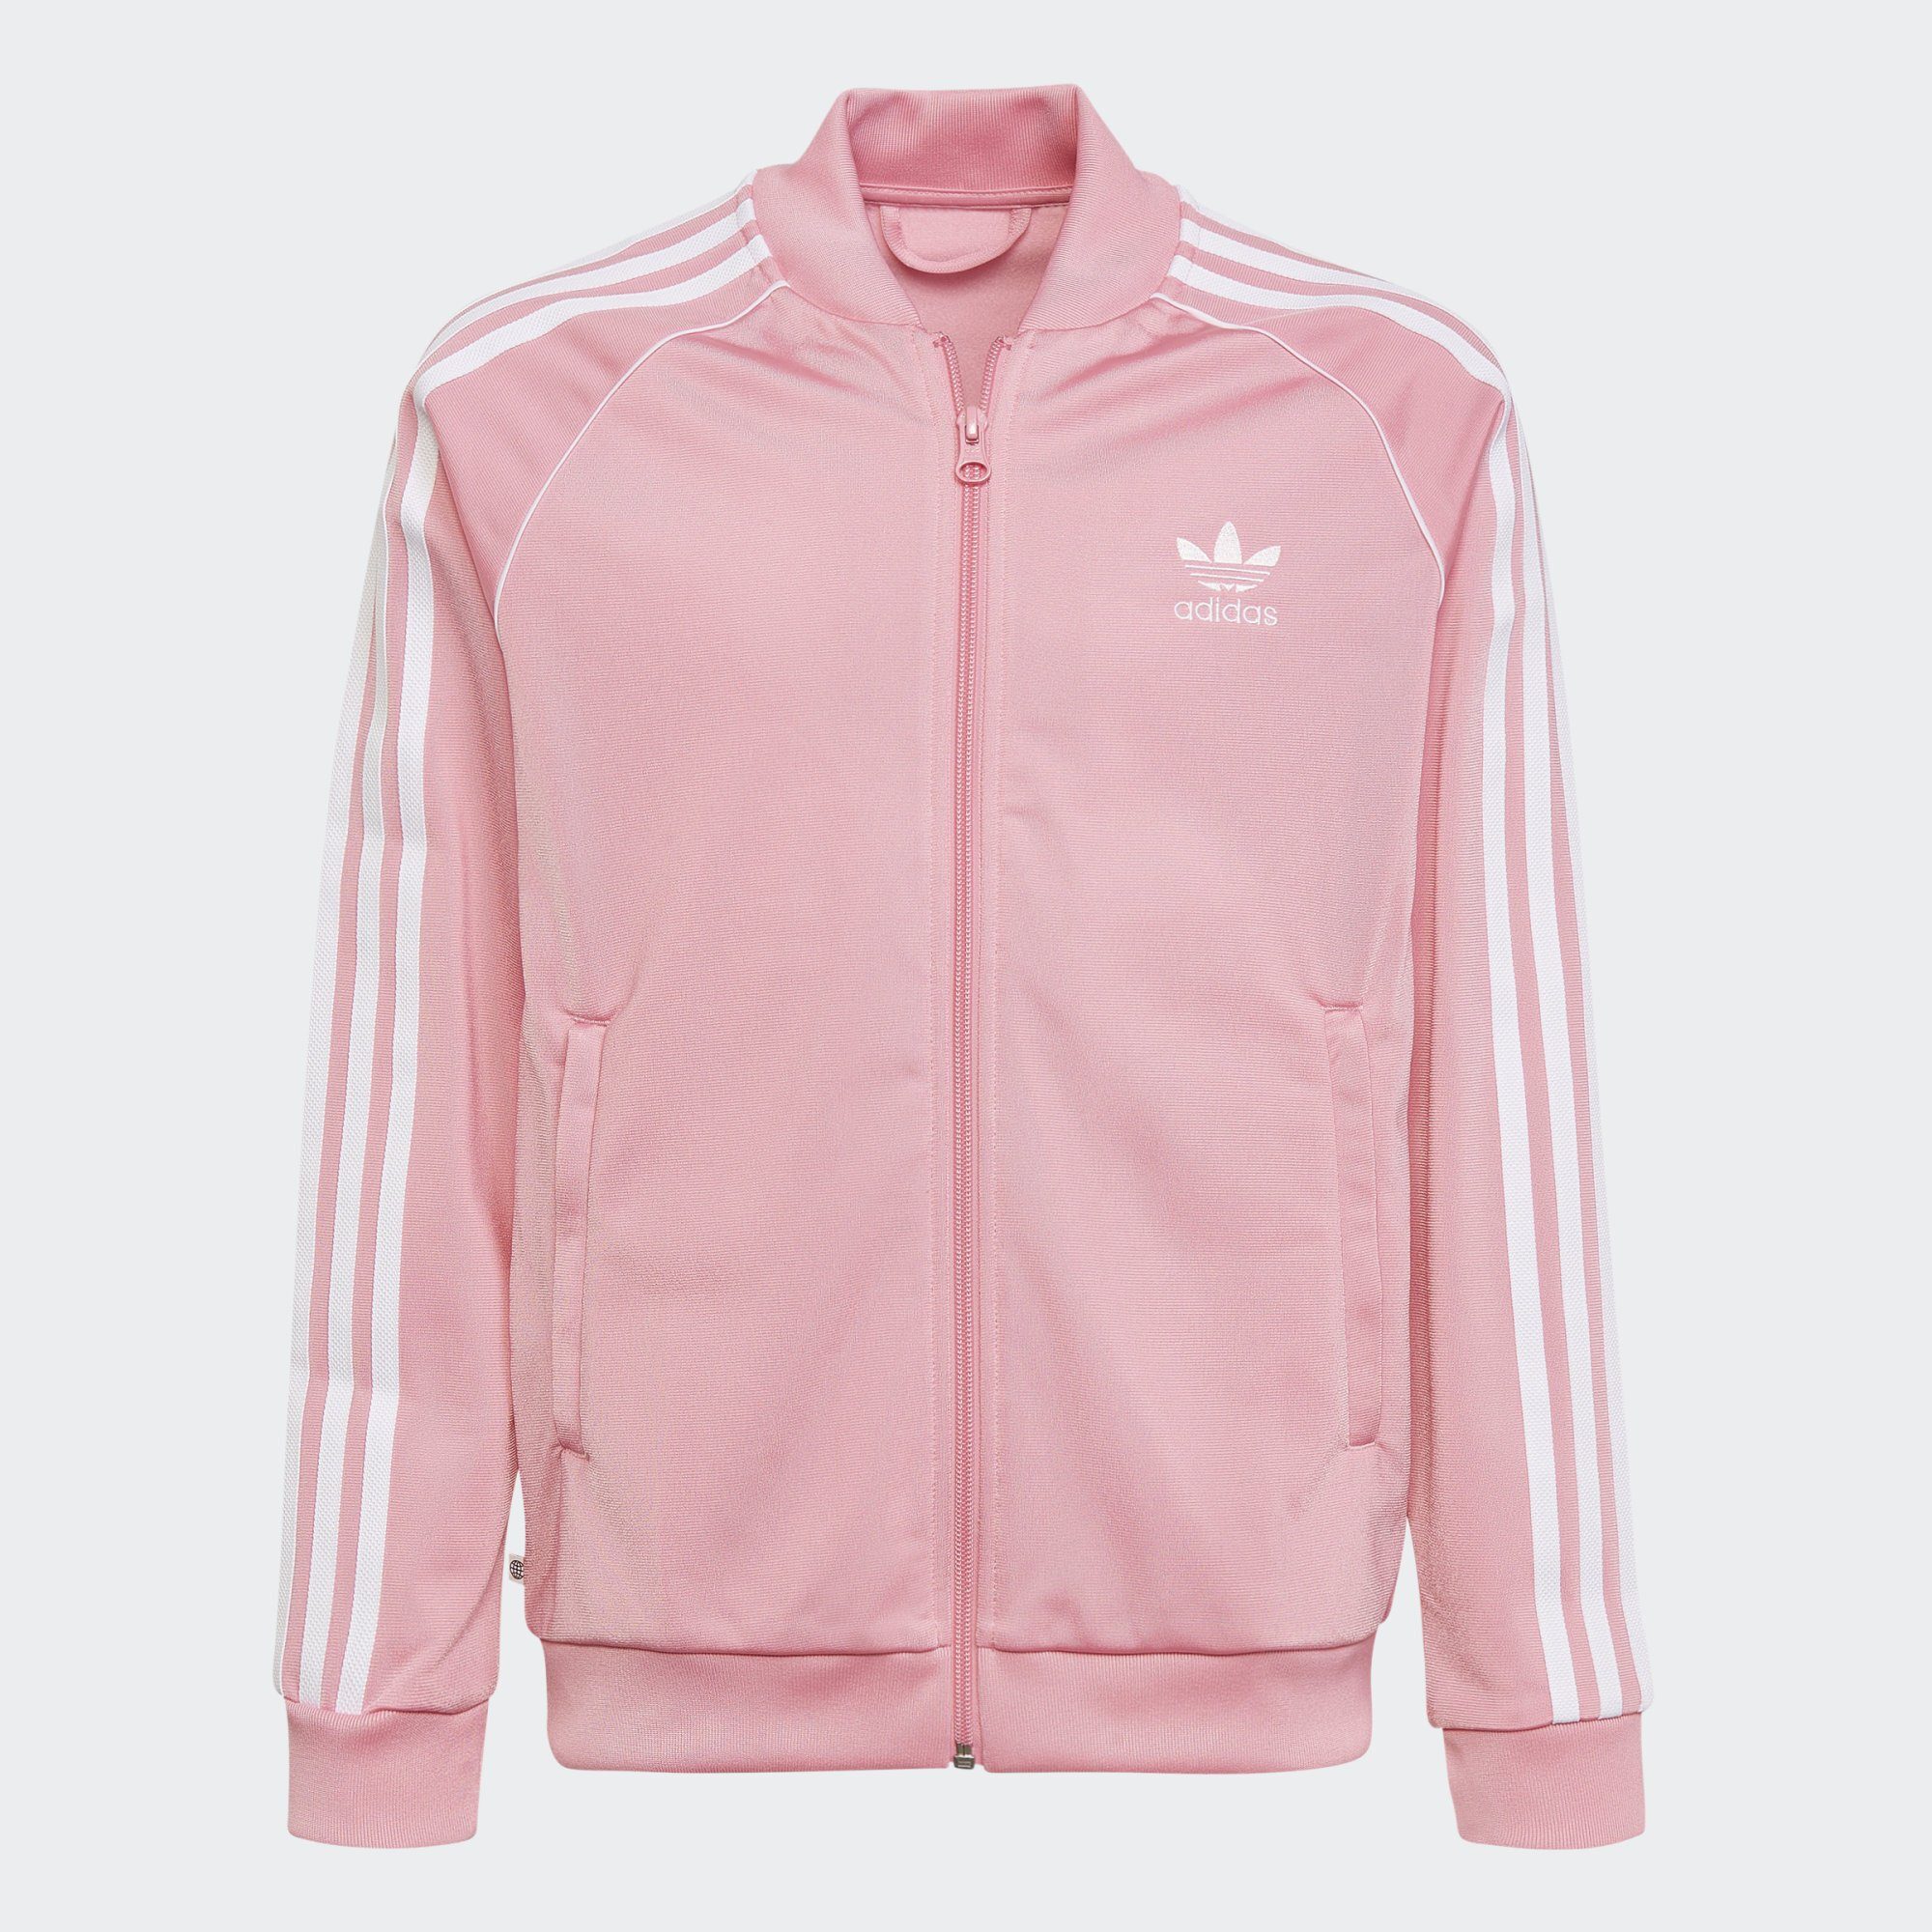 Originals Trainingsjacke JACKE ADICOLOR ORIGINALS Bliss Pink adidas SST